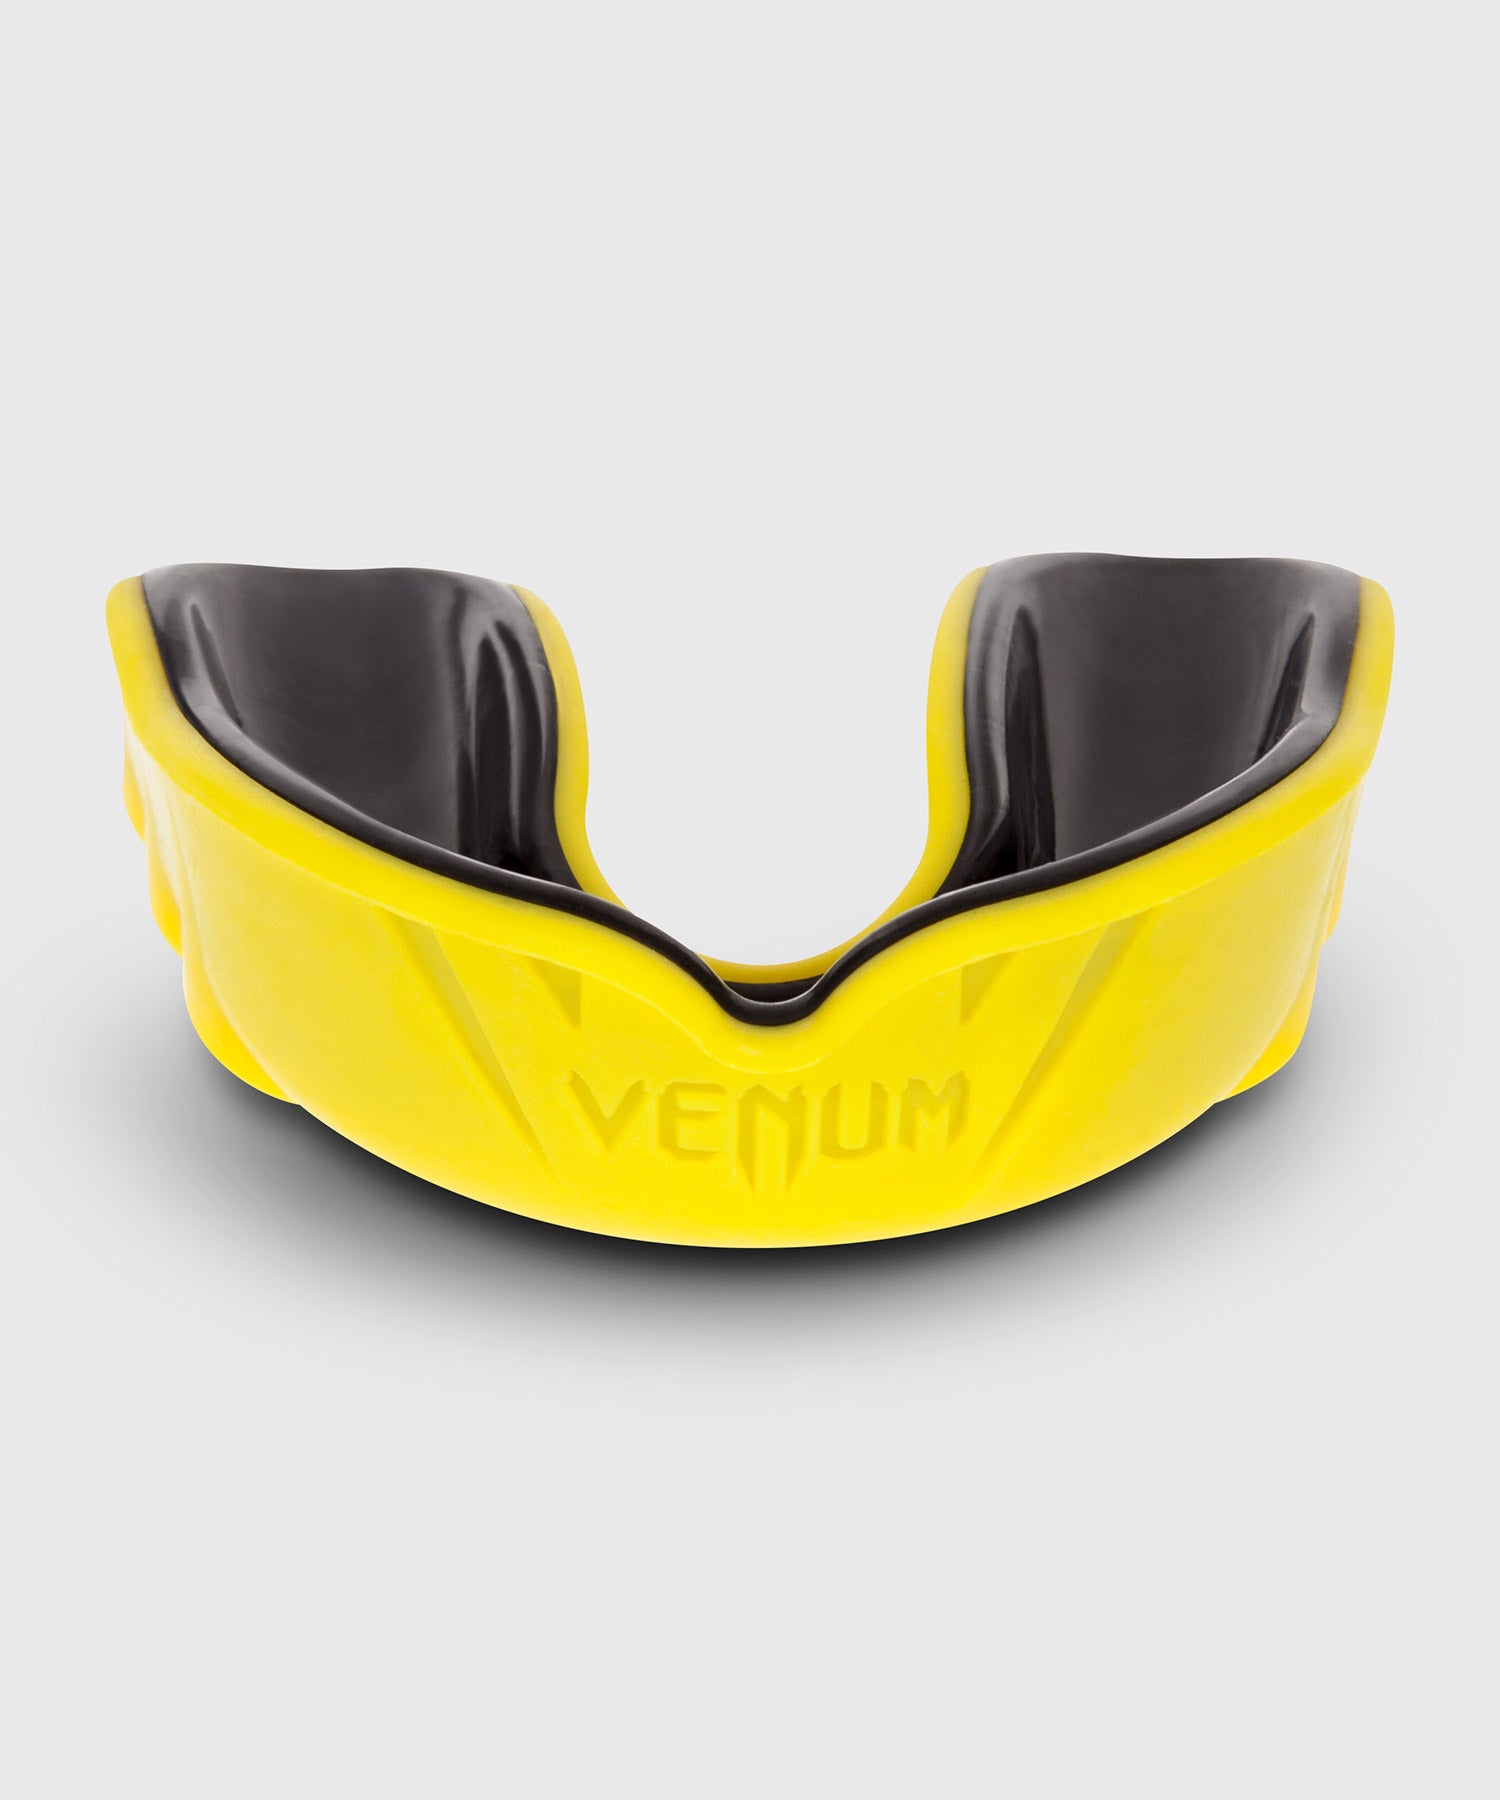 Buy Protector bucal Venum Challenger Online Ecuador